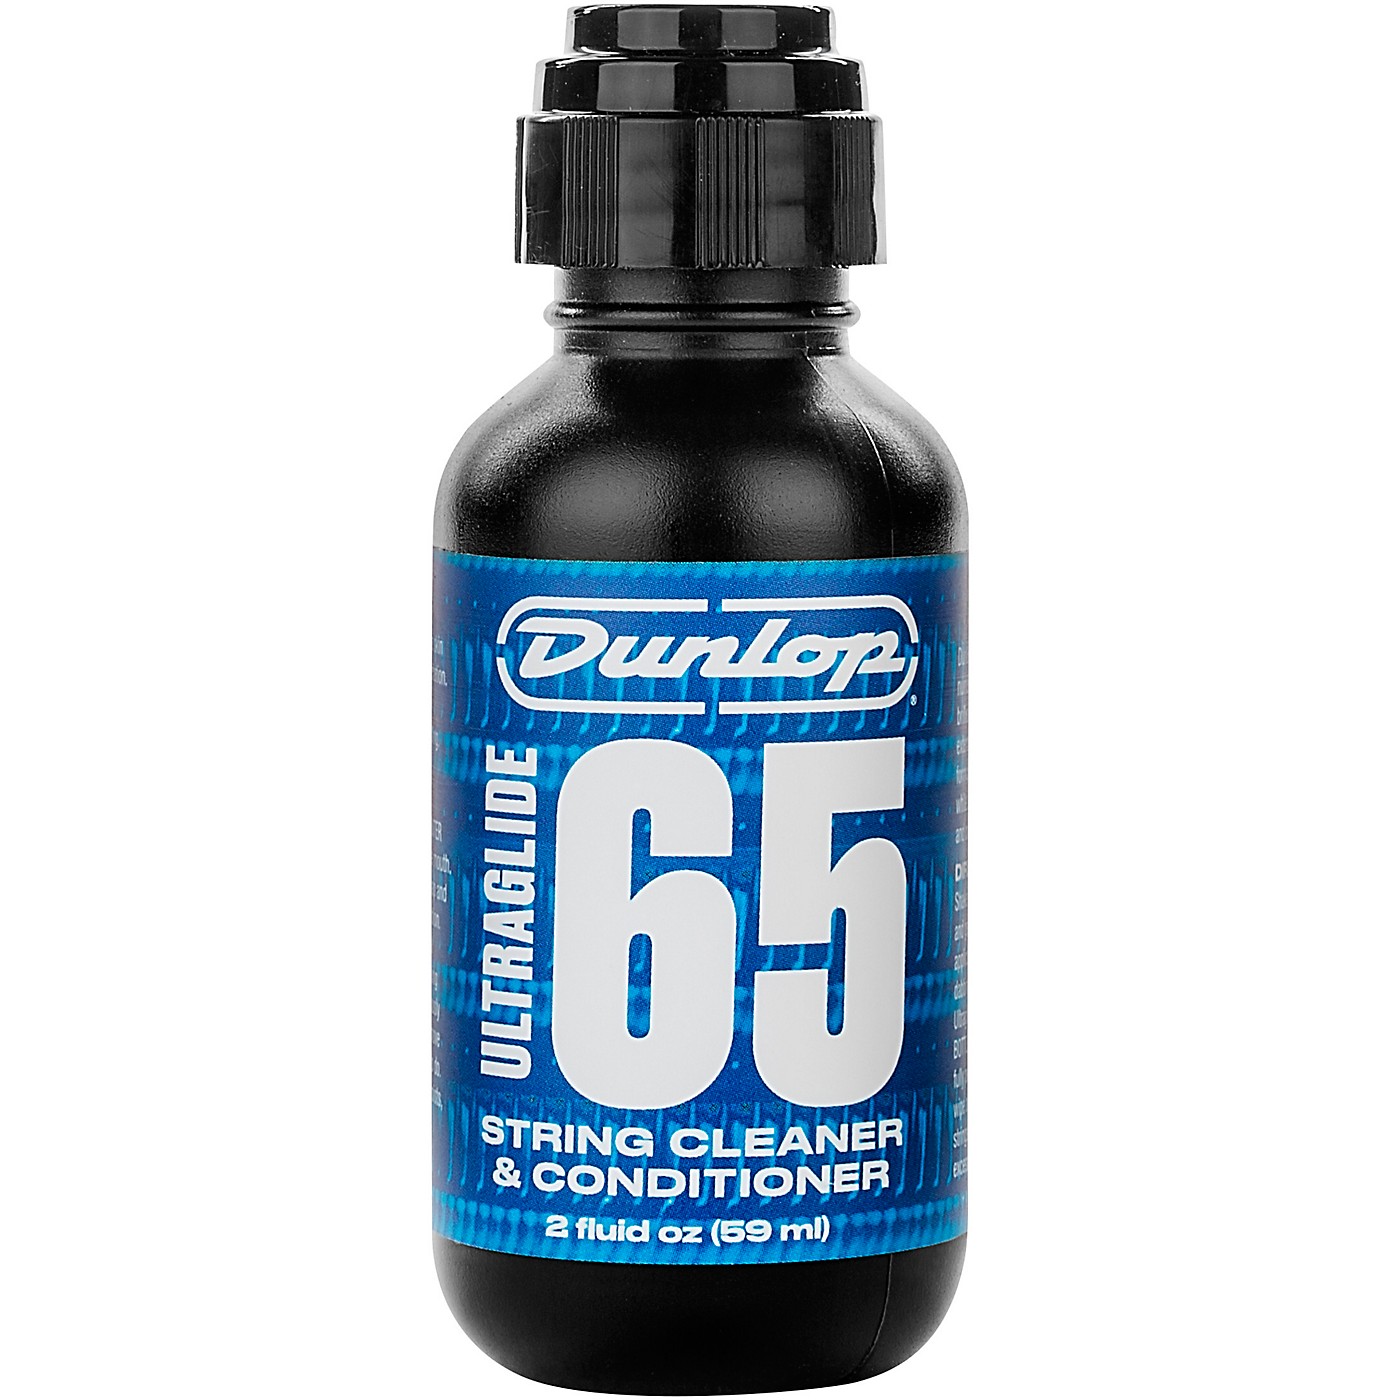 Dunlop Ultraglide 65 String Cleaner & Conditioner thumbnail